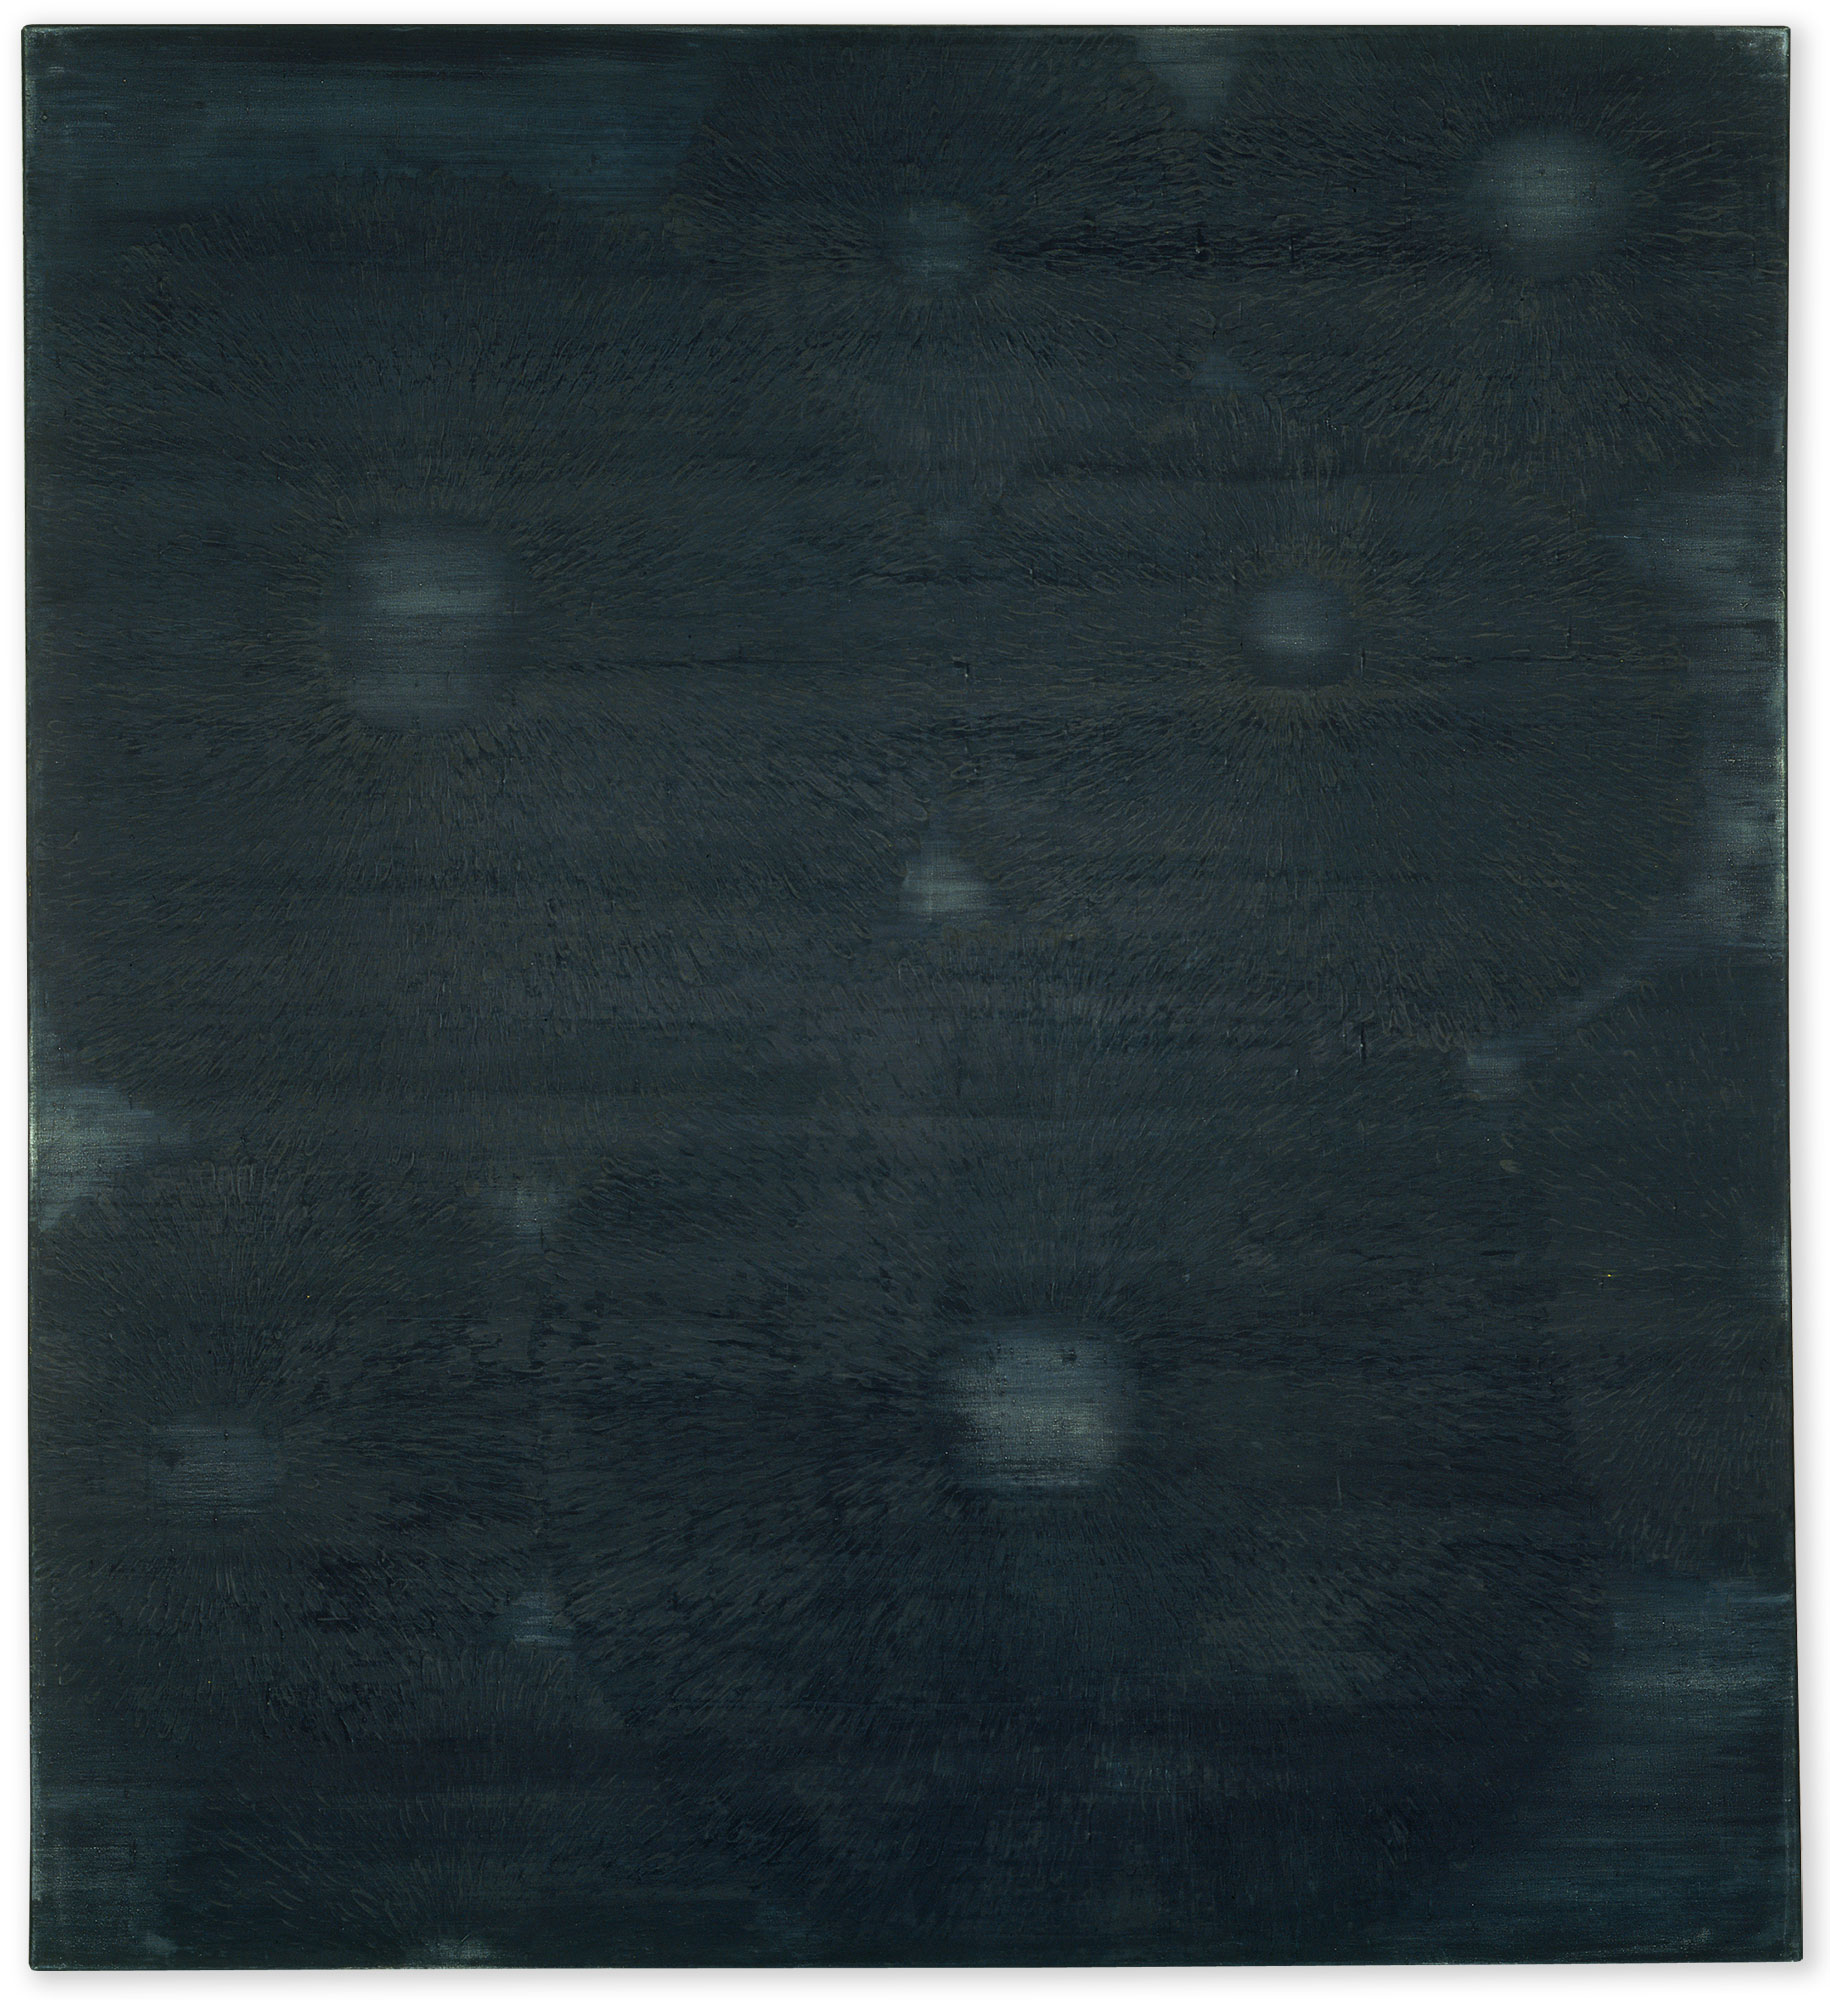 SEMANA XII / 2000 · egg tempera on canvas · 220 x 200 cm